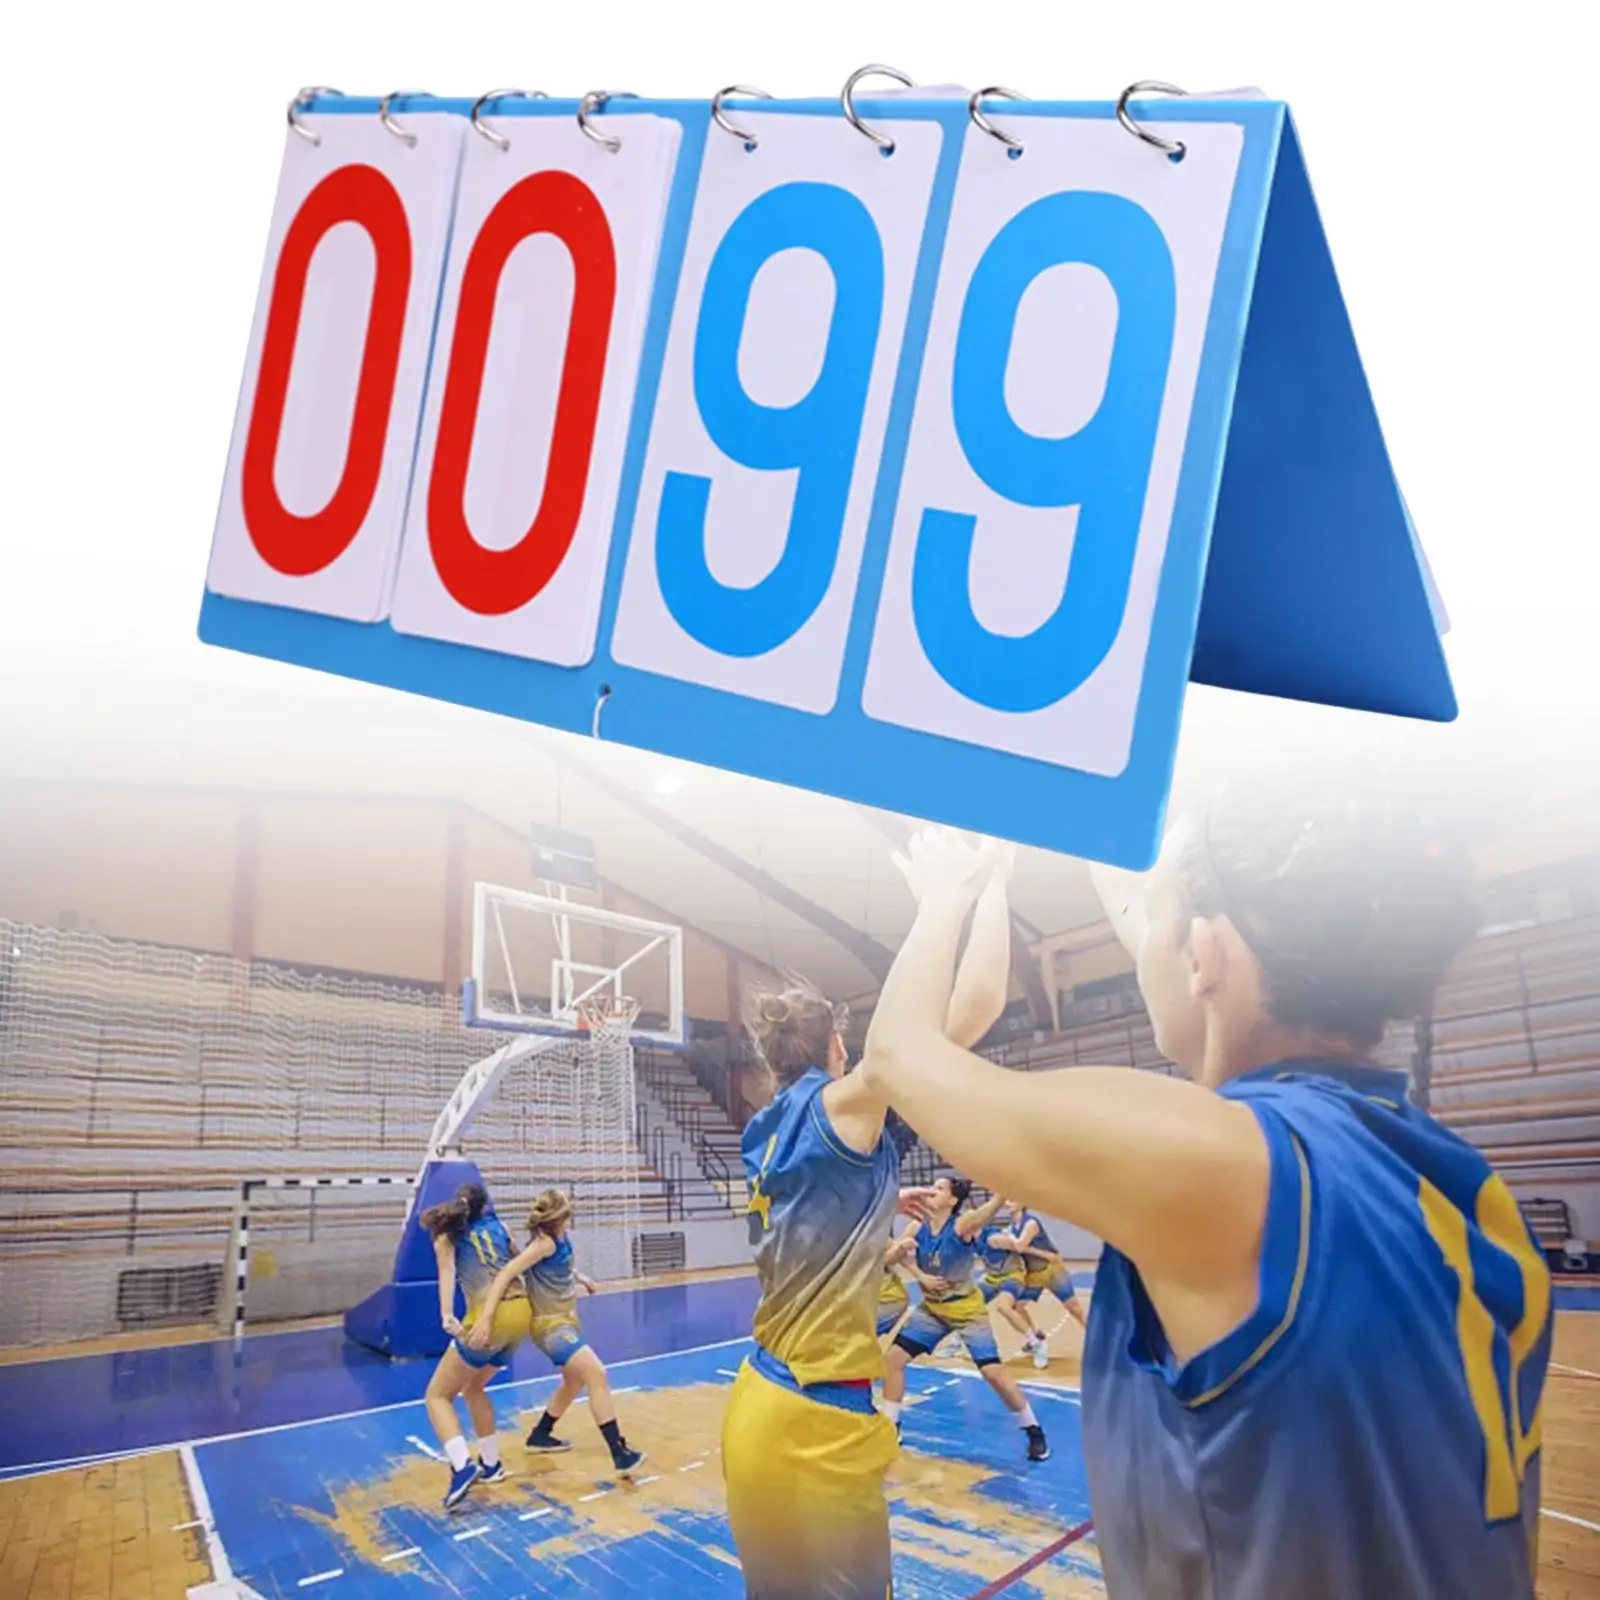 Table Top Scoreboard Score Turn Waterproof Foldable Premium Score Keeper Easily Turn for Tennis Basketball Competitive Sports